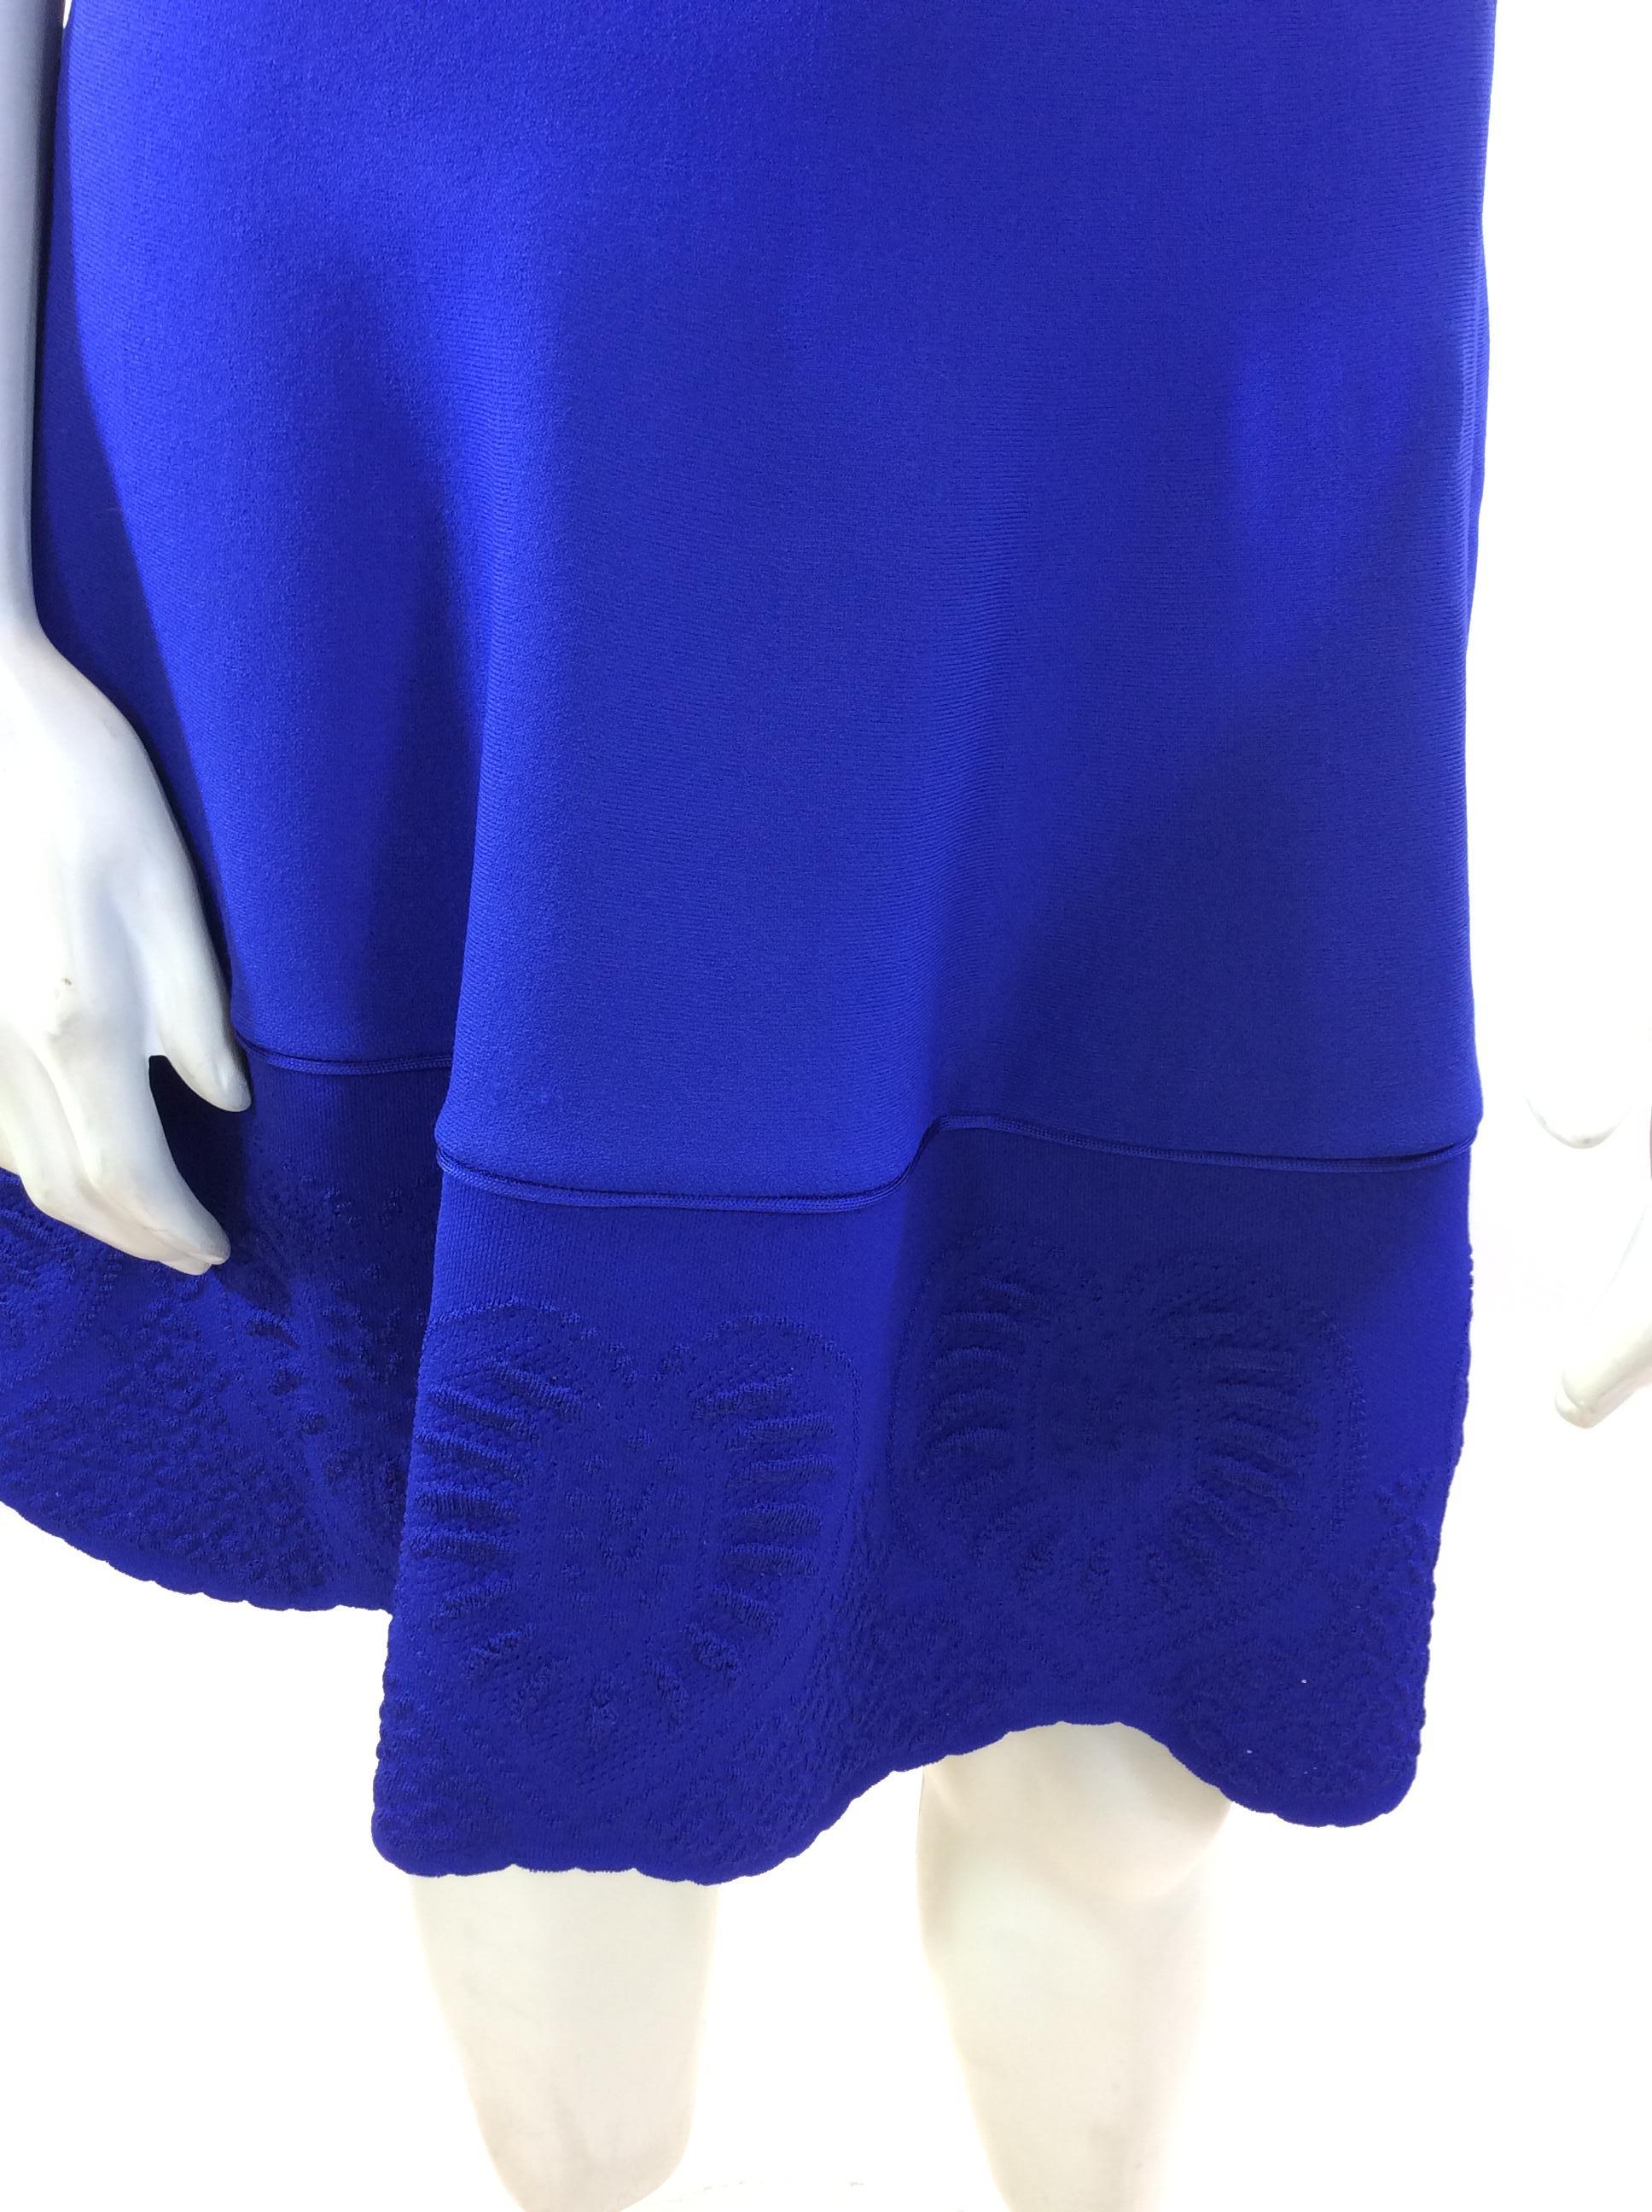 Roberto Cavalli Royal Blue Sleeveless Dress For Sale 2